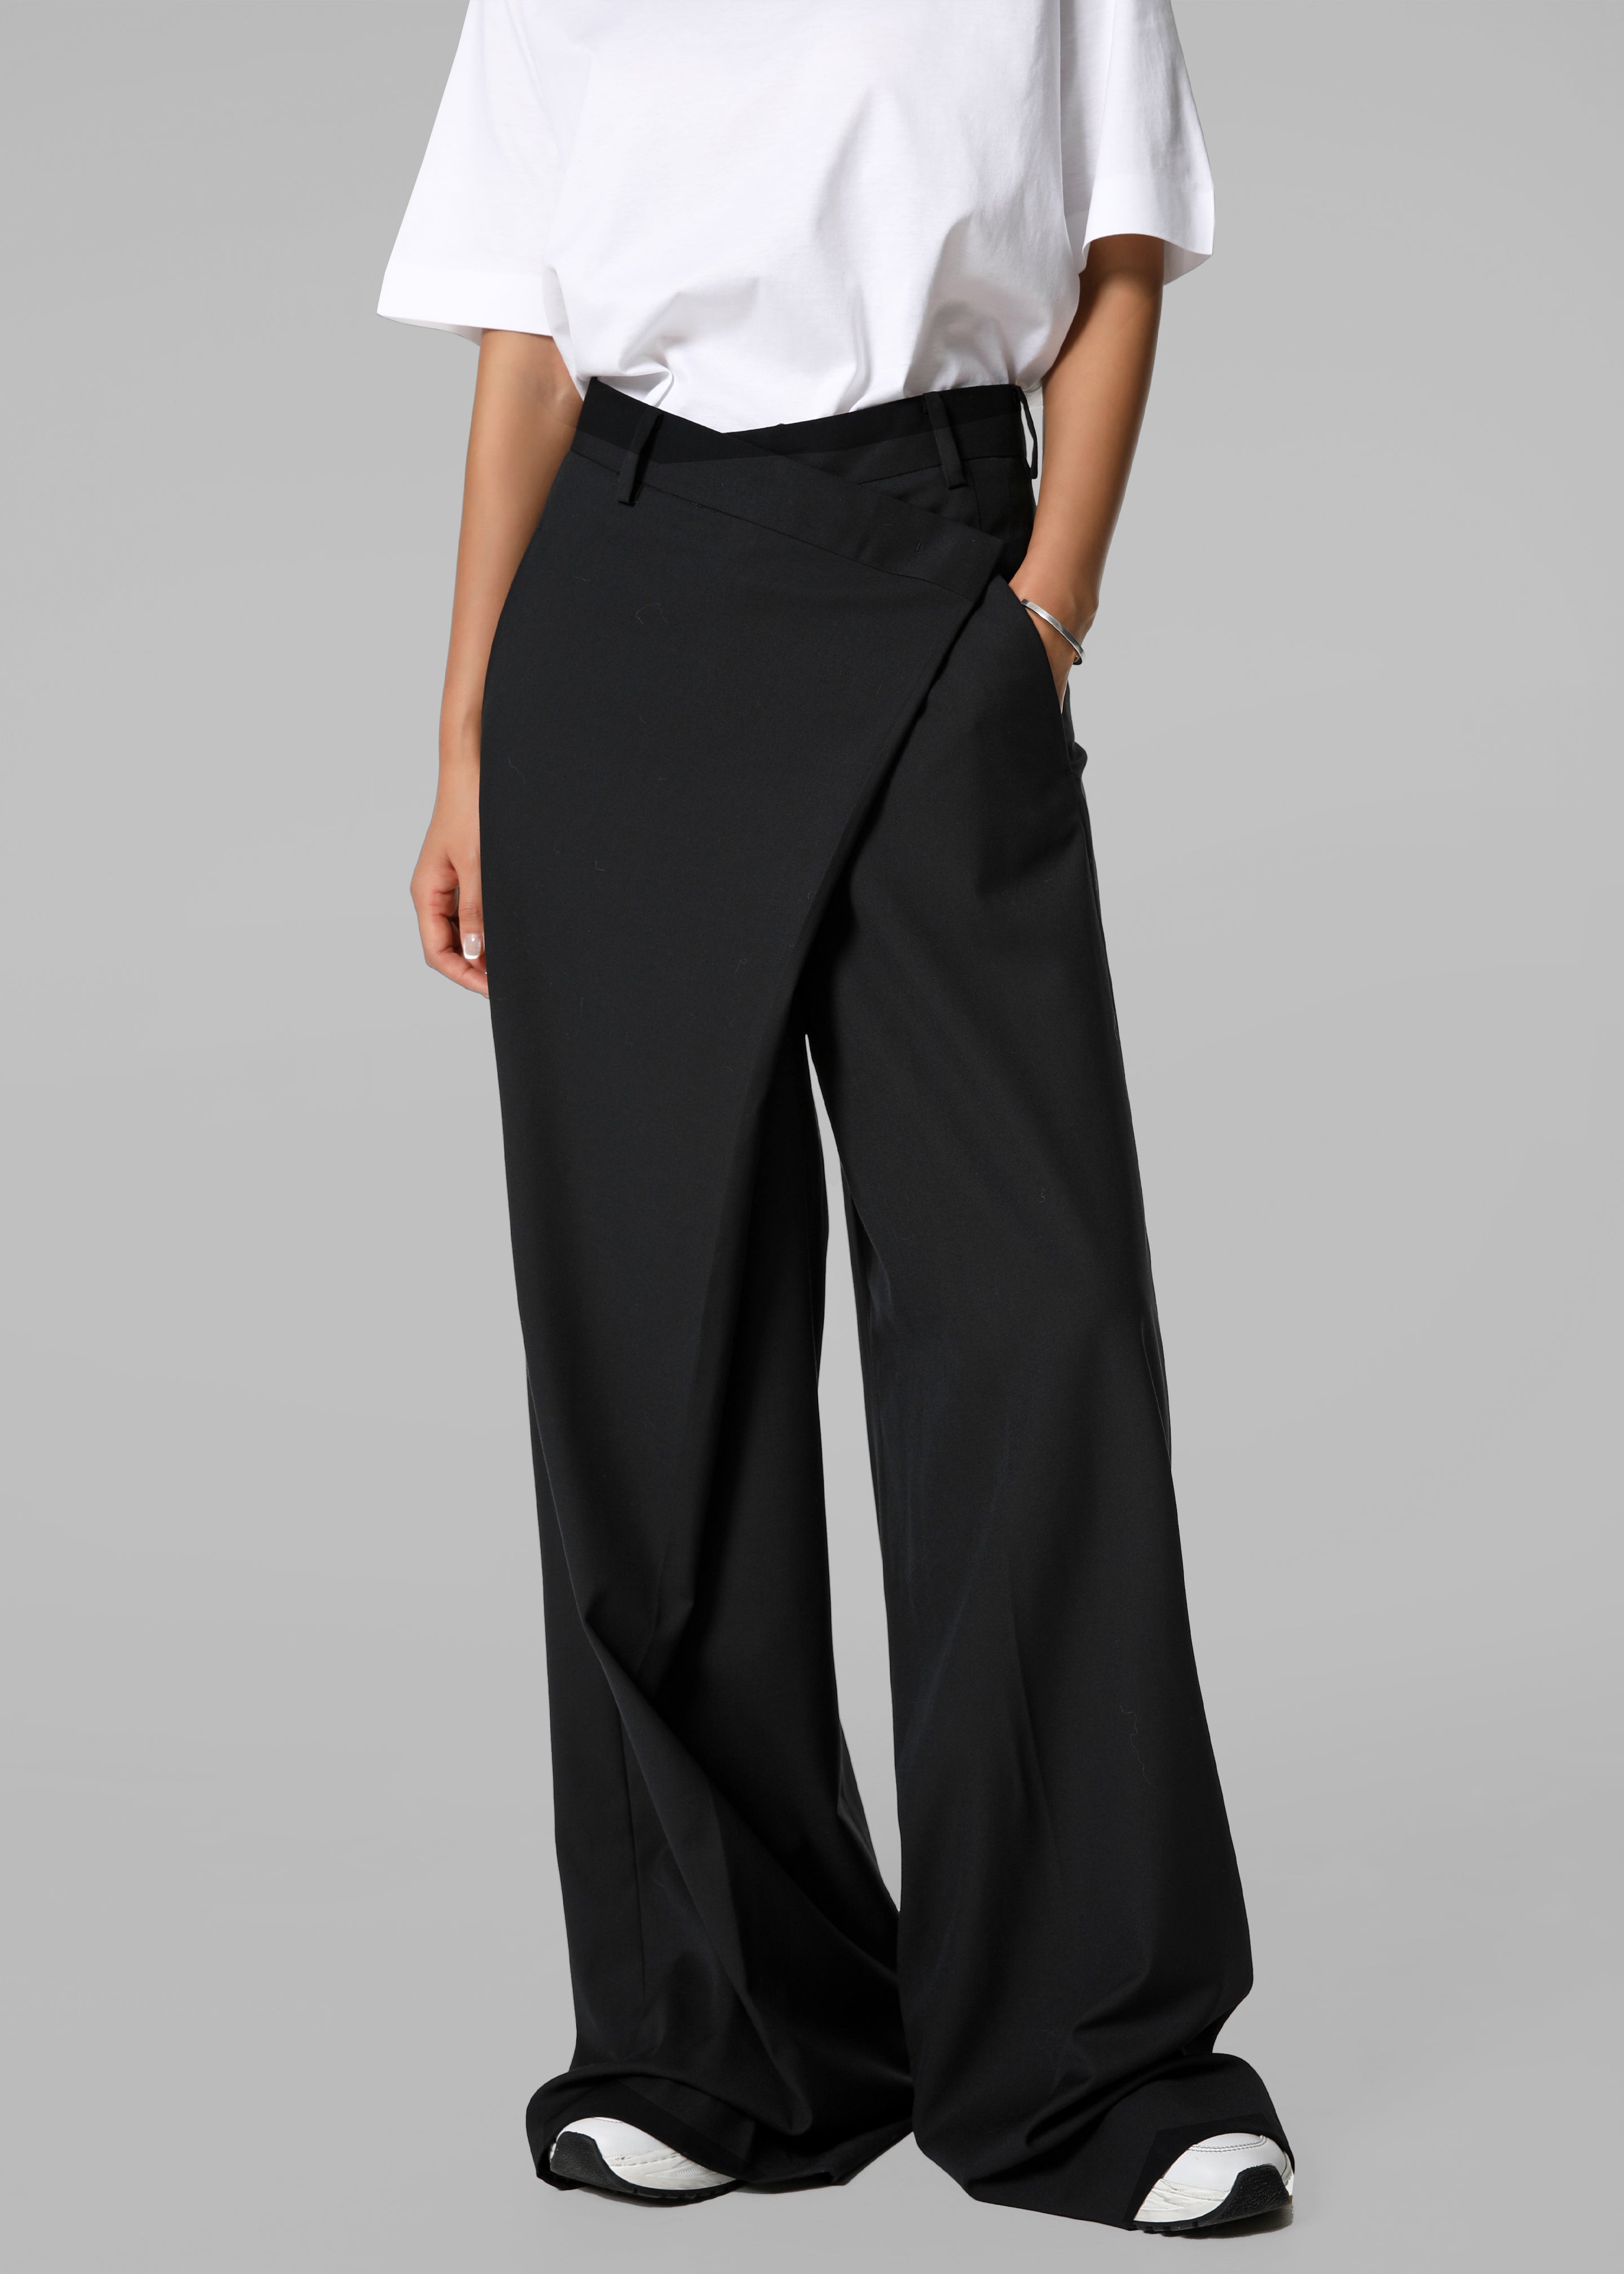 Marjorie Asymmetrical Trousers - Black - 11